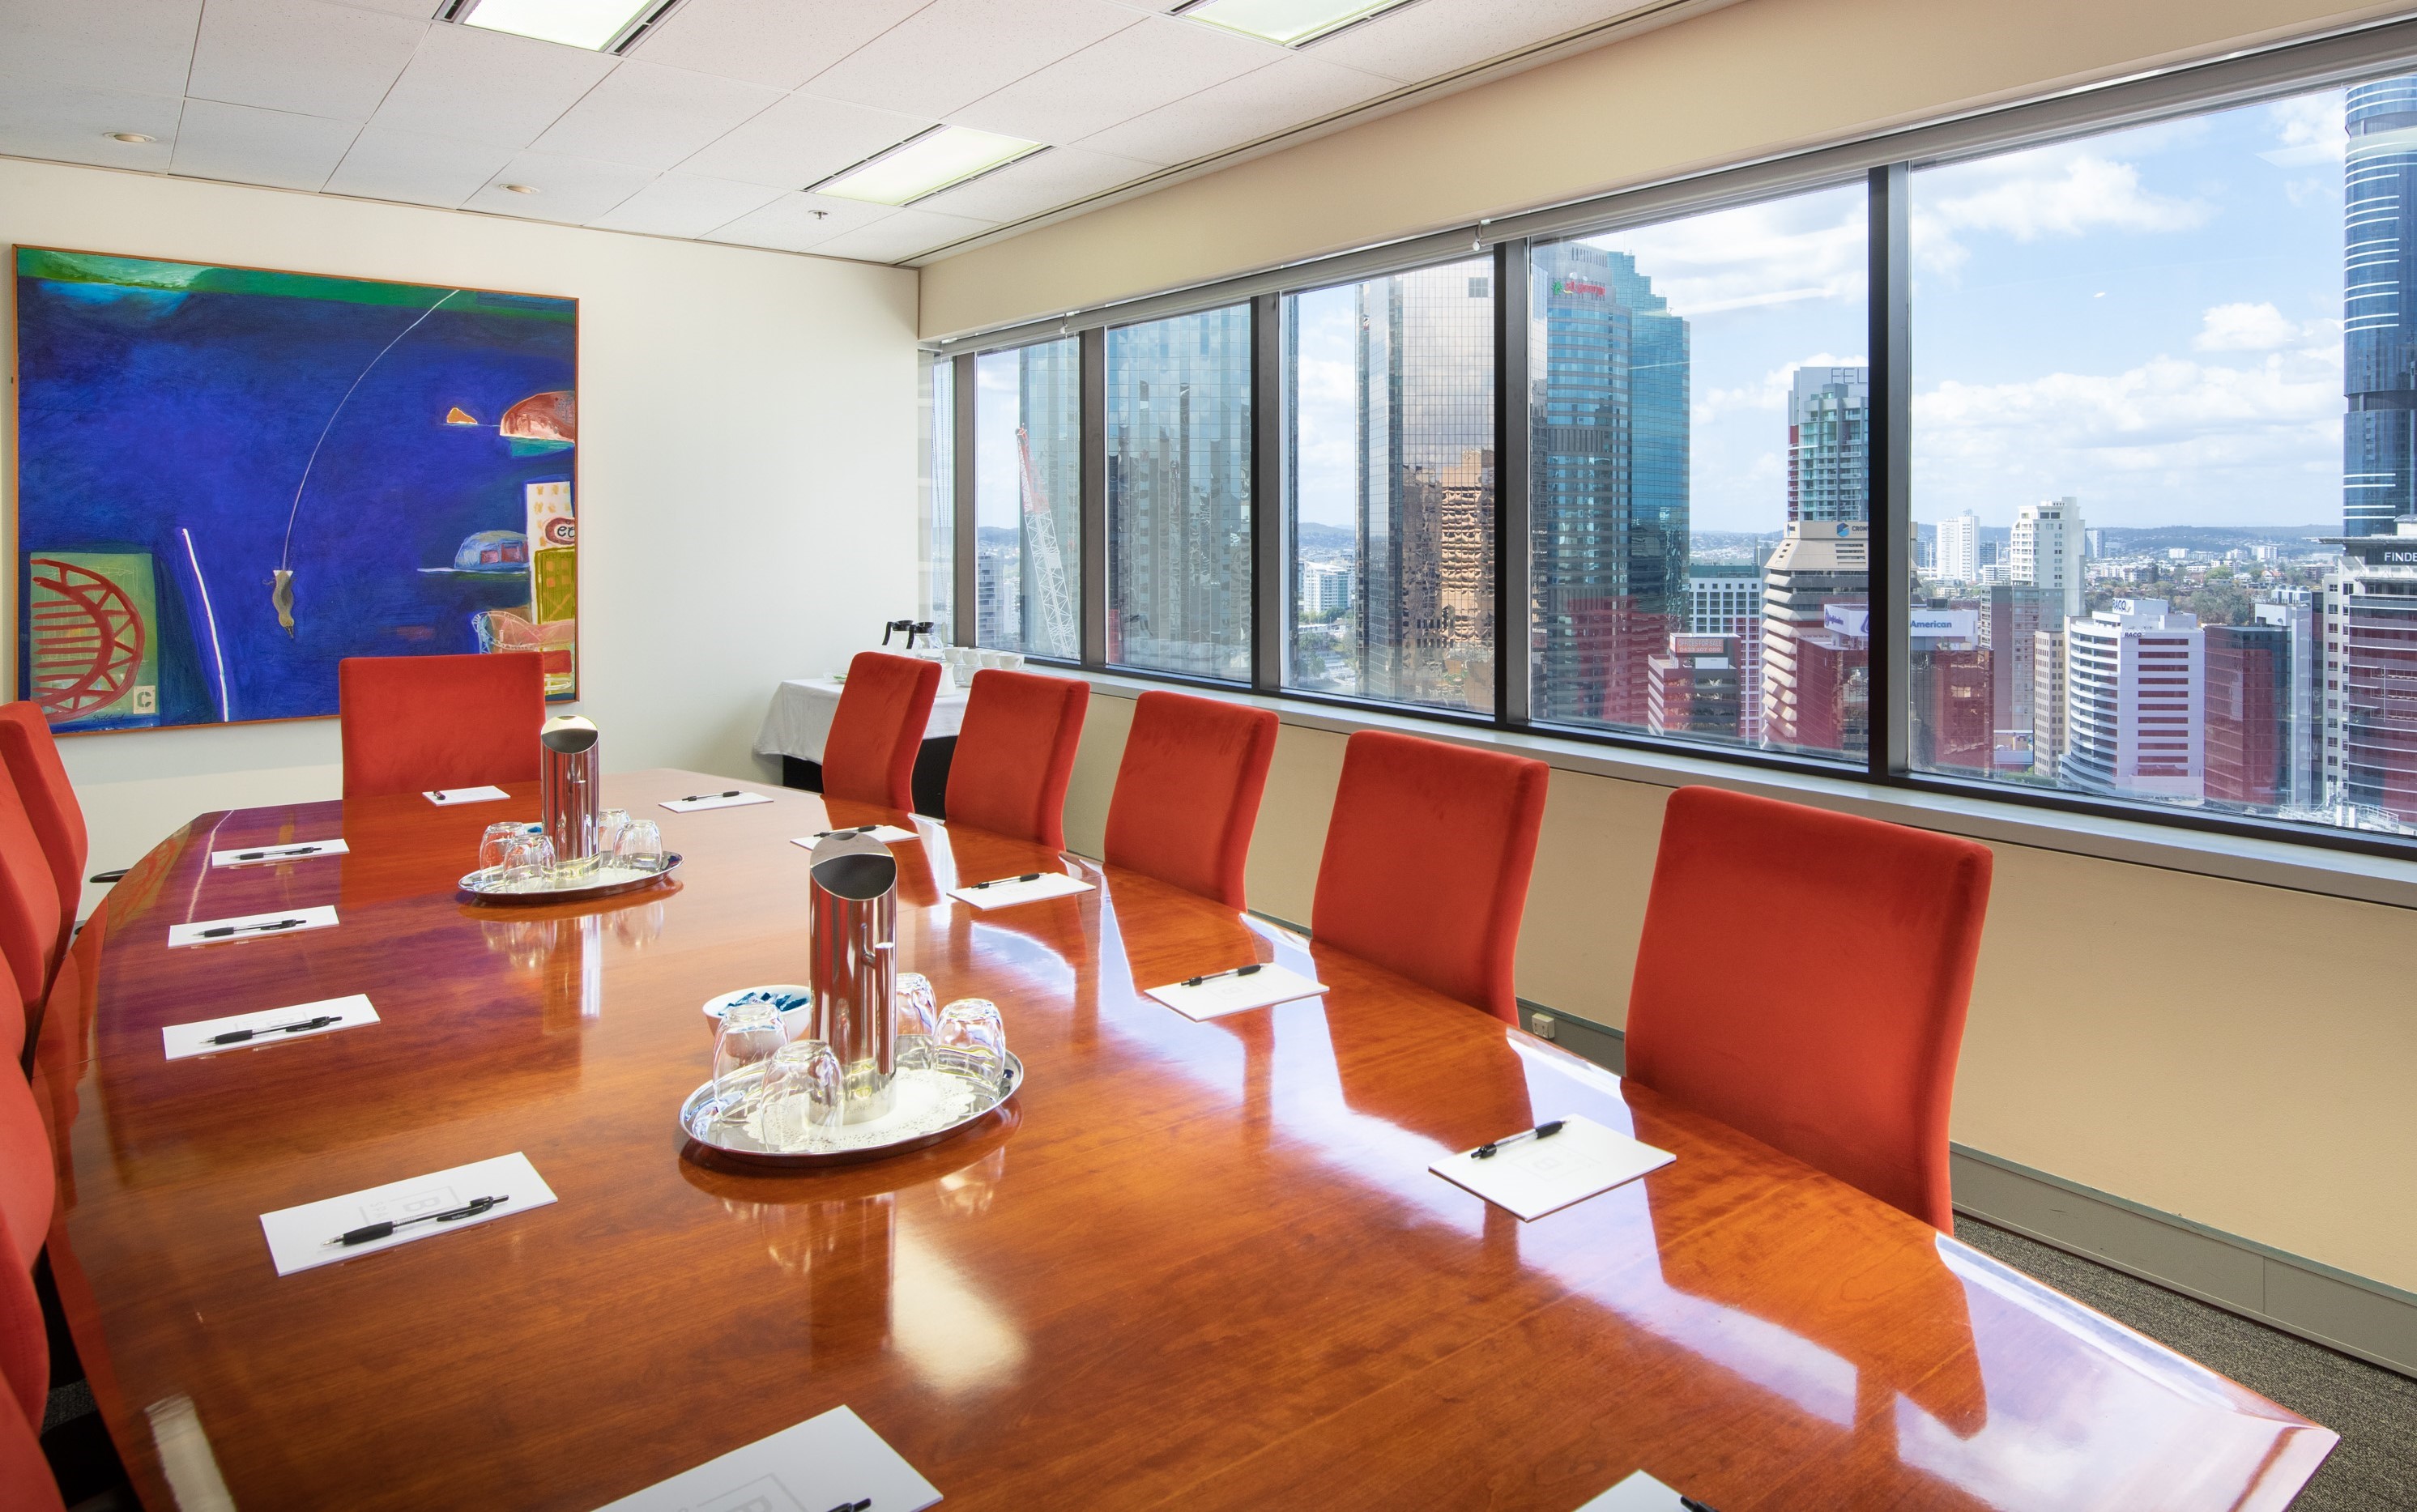 Meeting Rooms at BSPACE Brisbane, 300 Queen St, Brisbane City, QLD, 4000, Australia